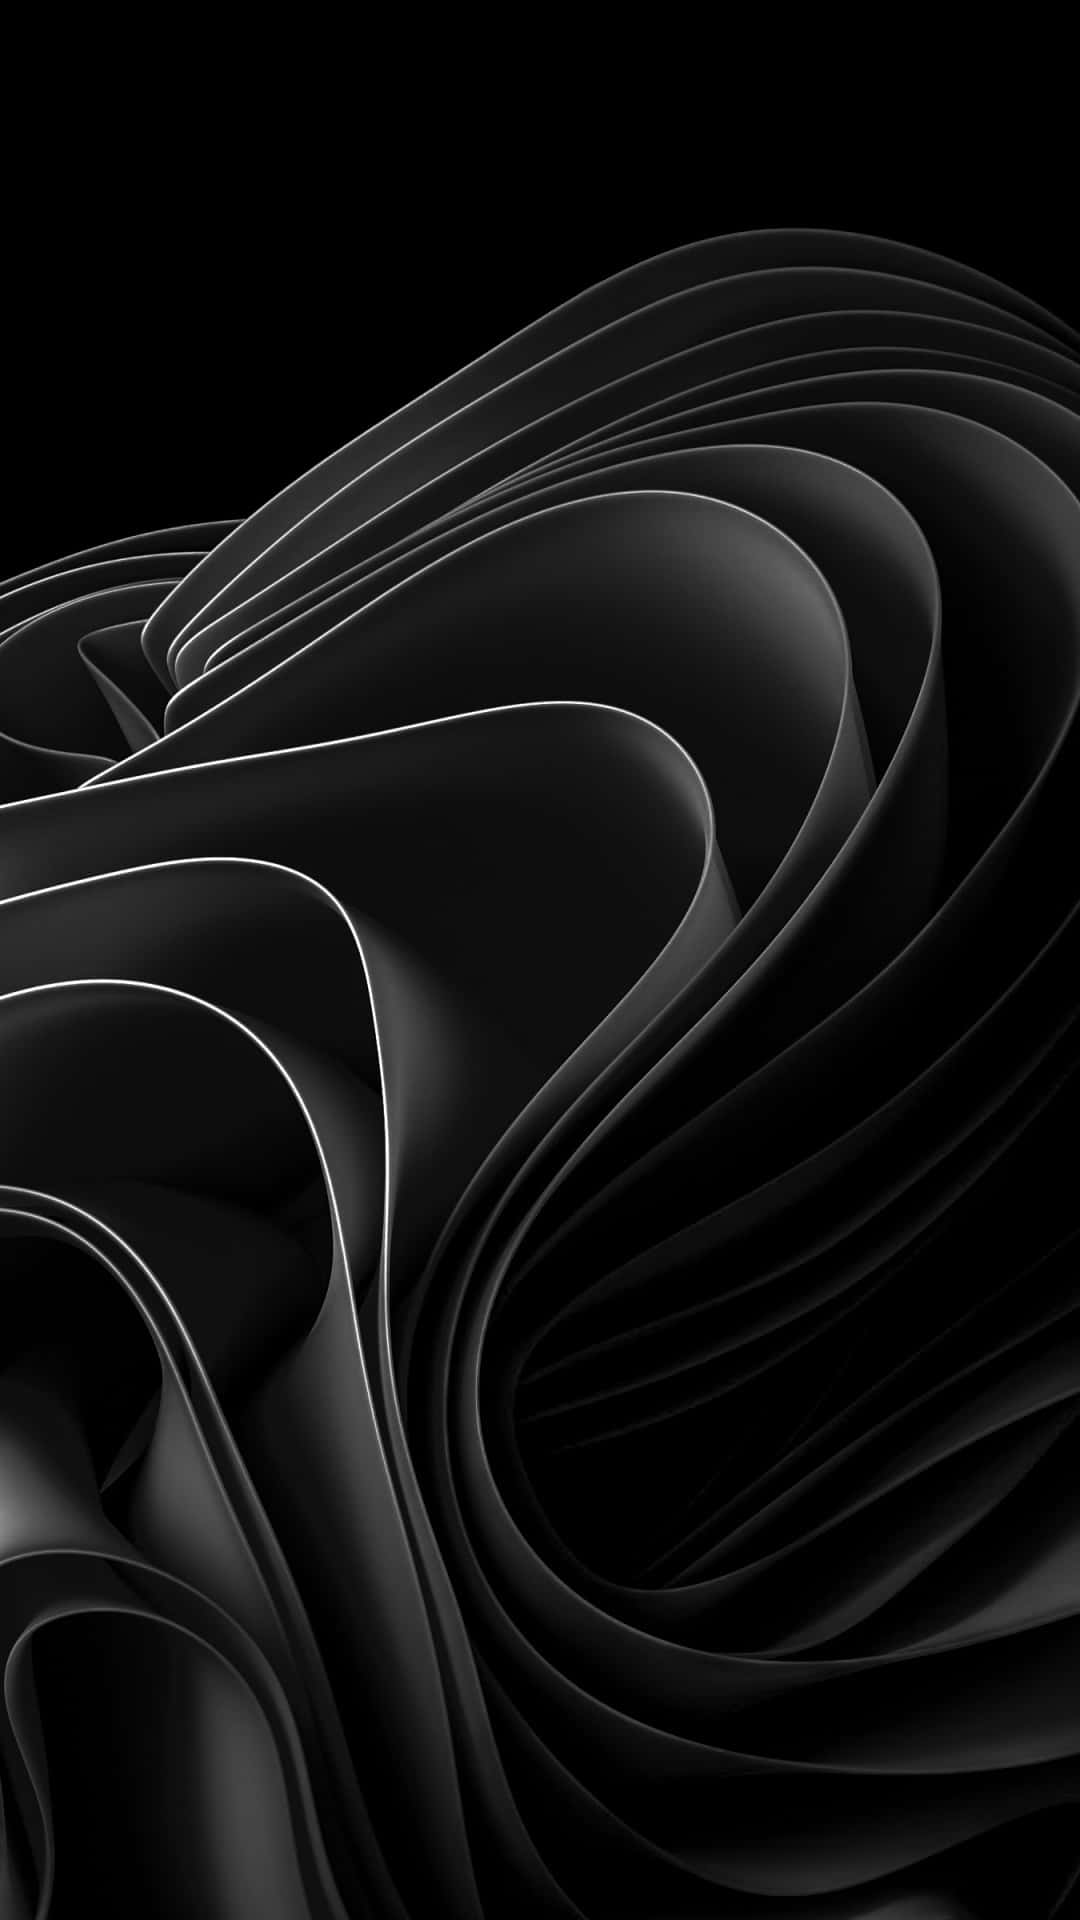 Download Elegant Interplay Of Black And Gray Shades